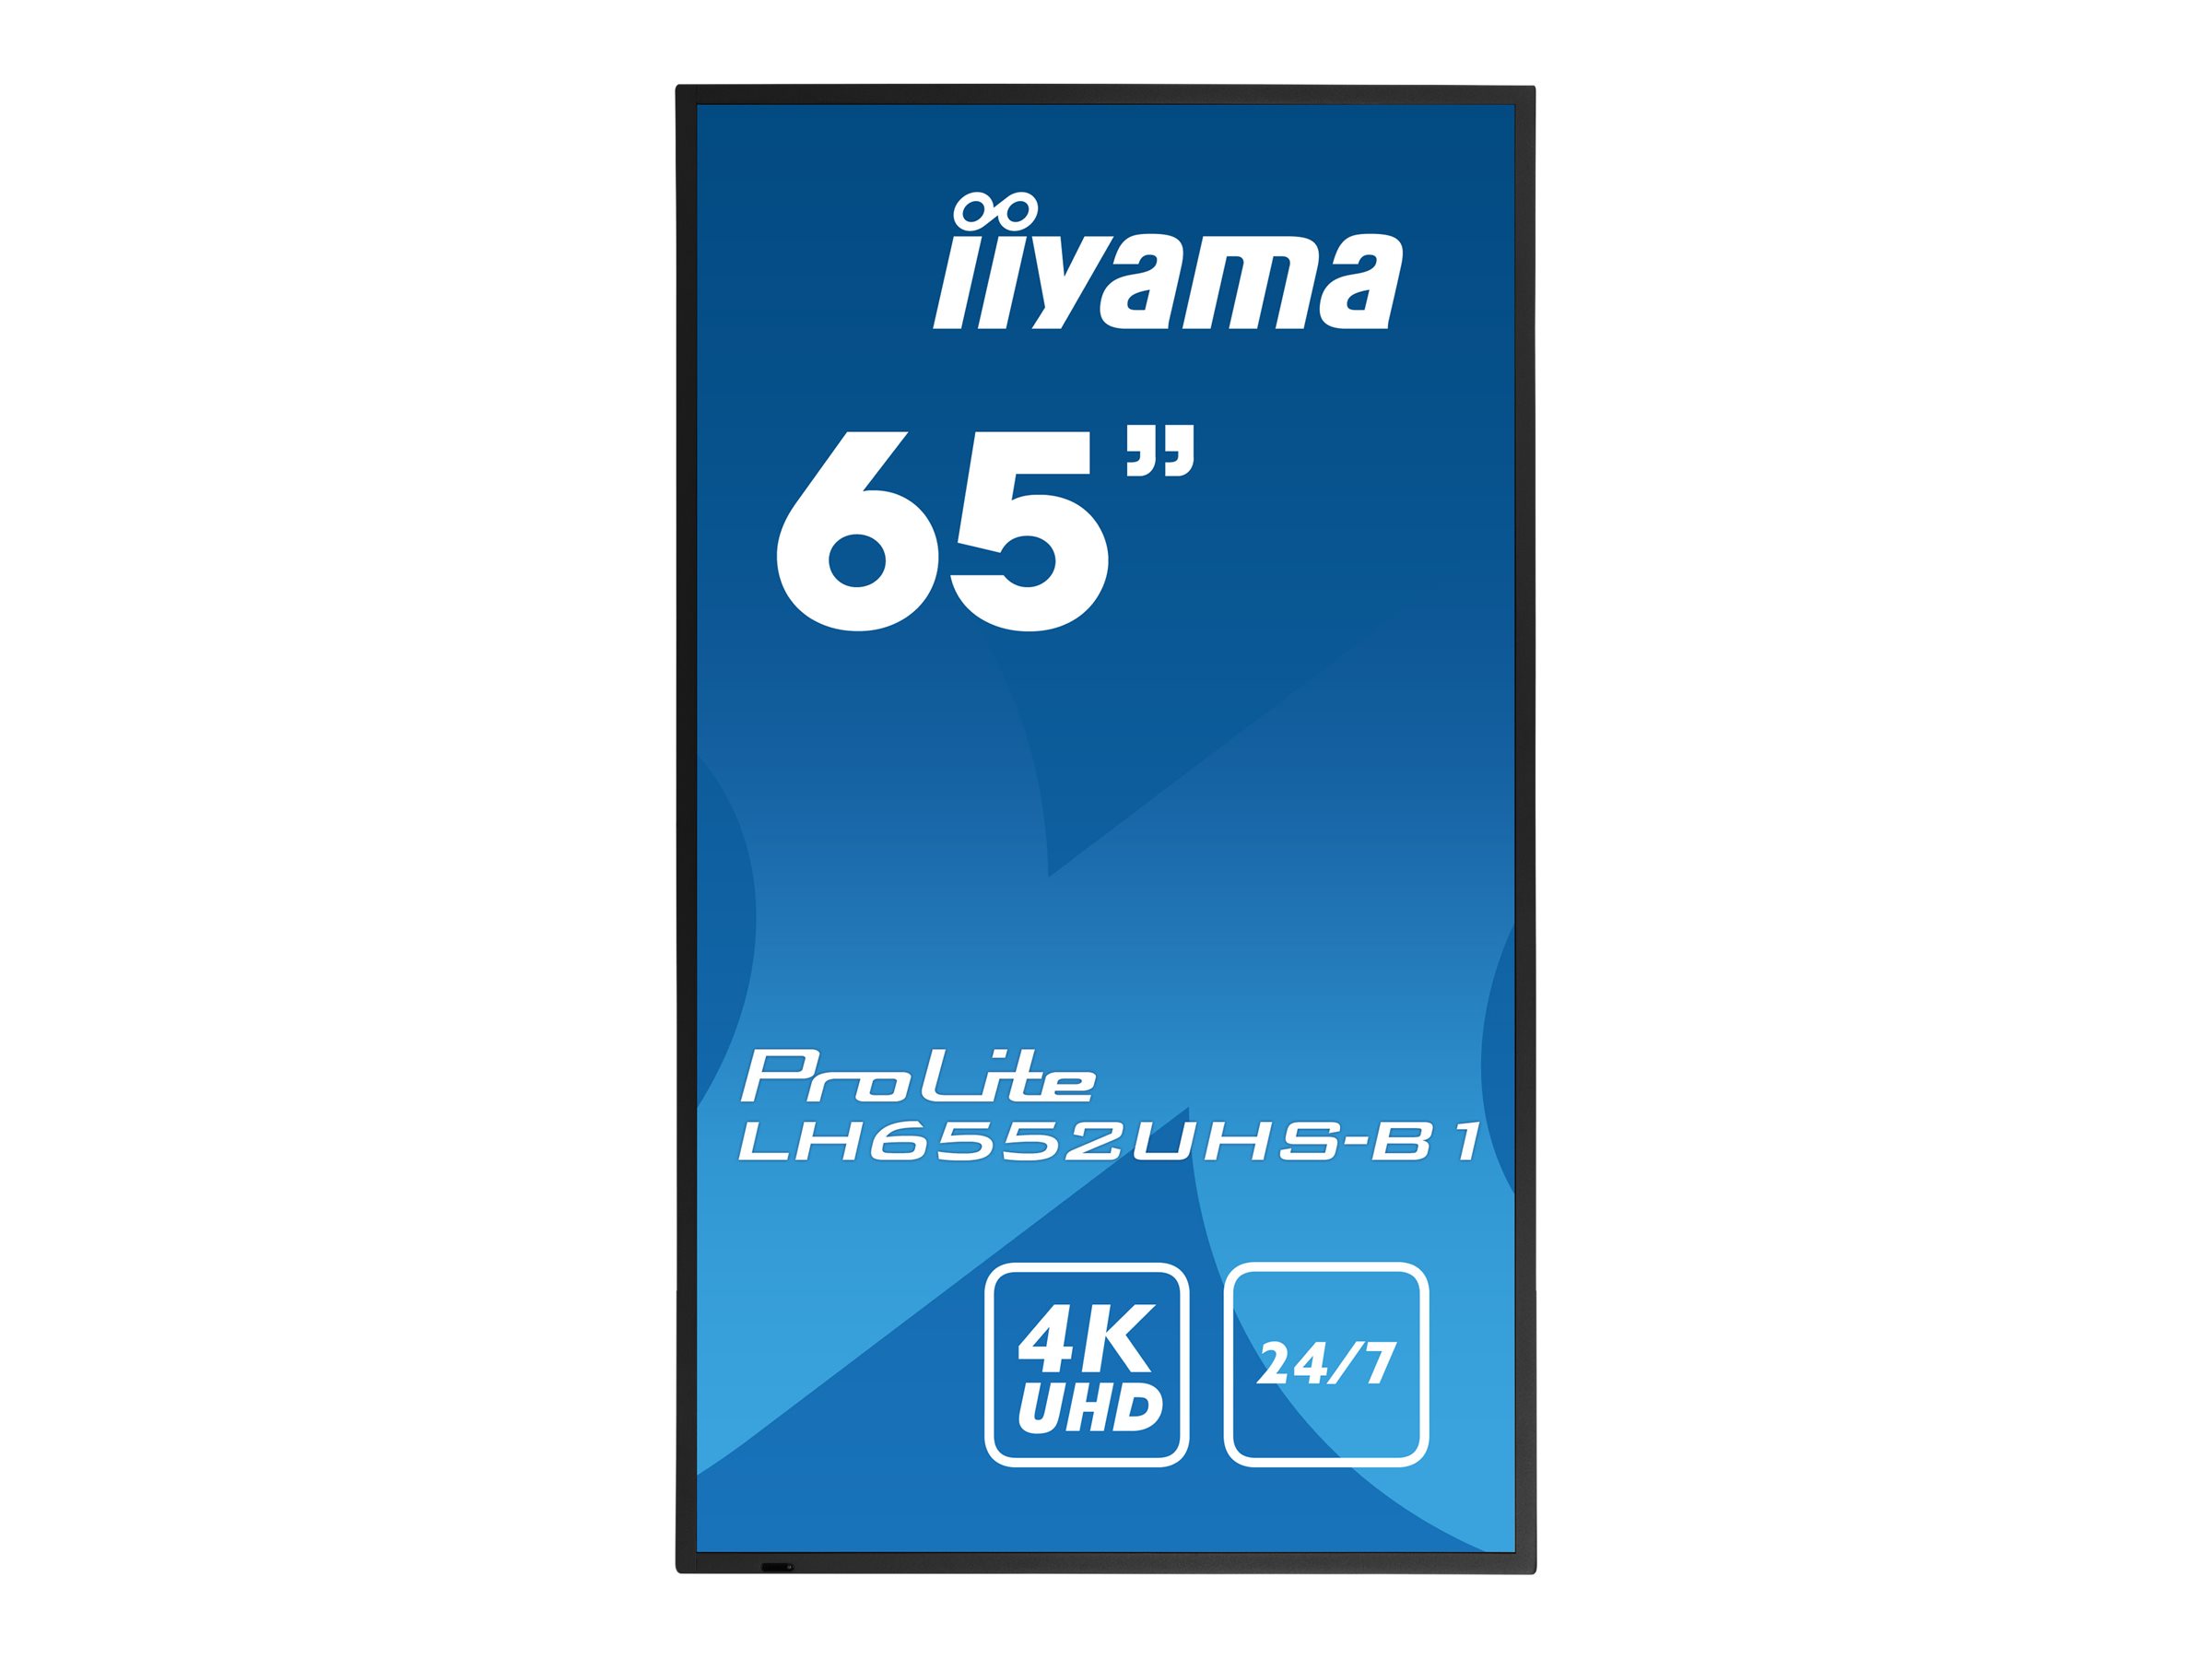 Iiyama LH6552UHS-B1, 65\" LCD 4k UHD, SDM-L